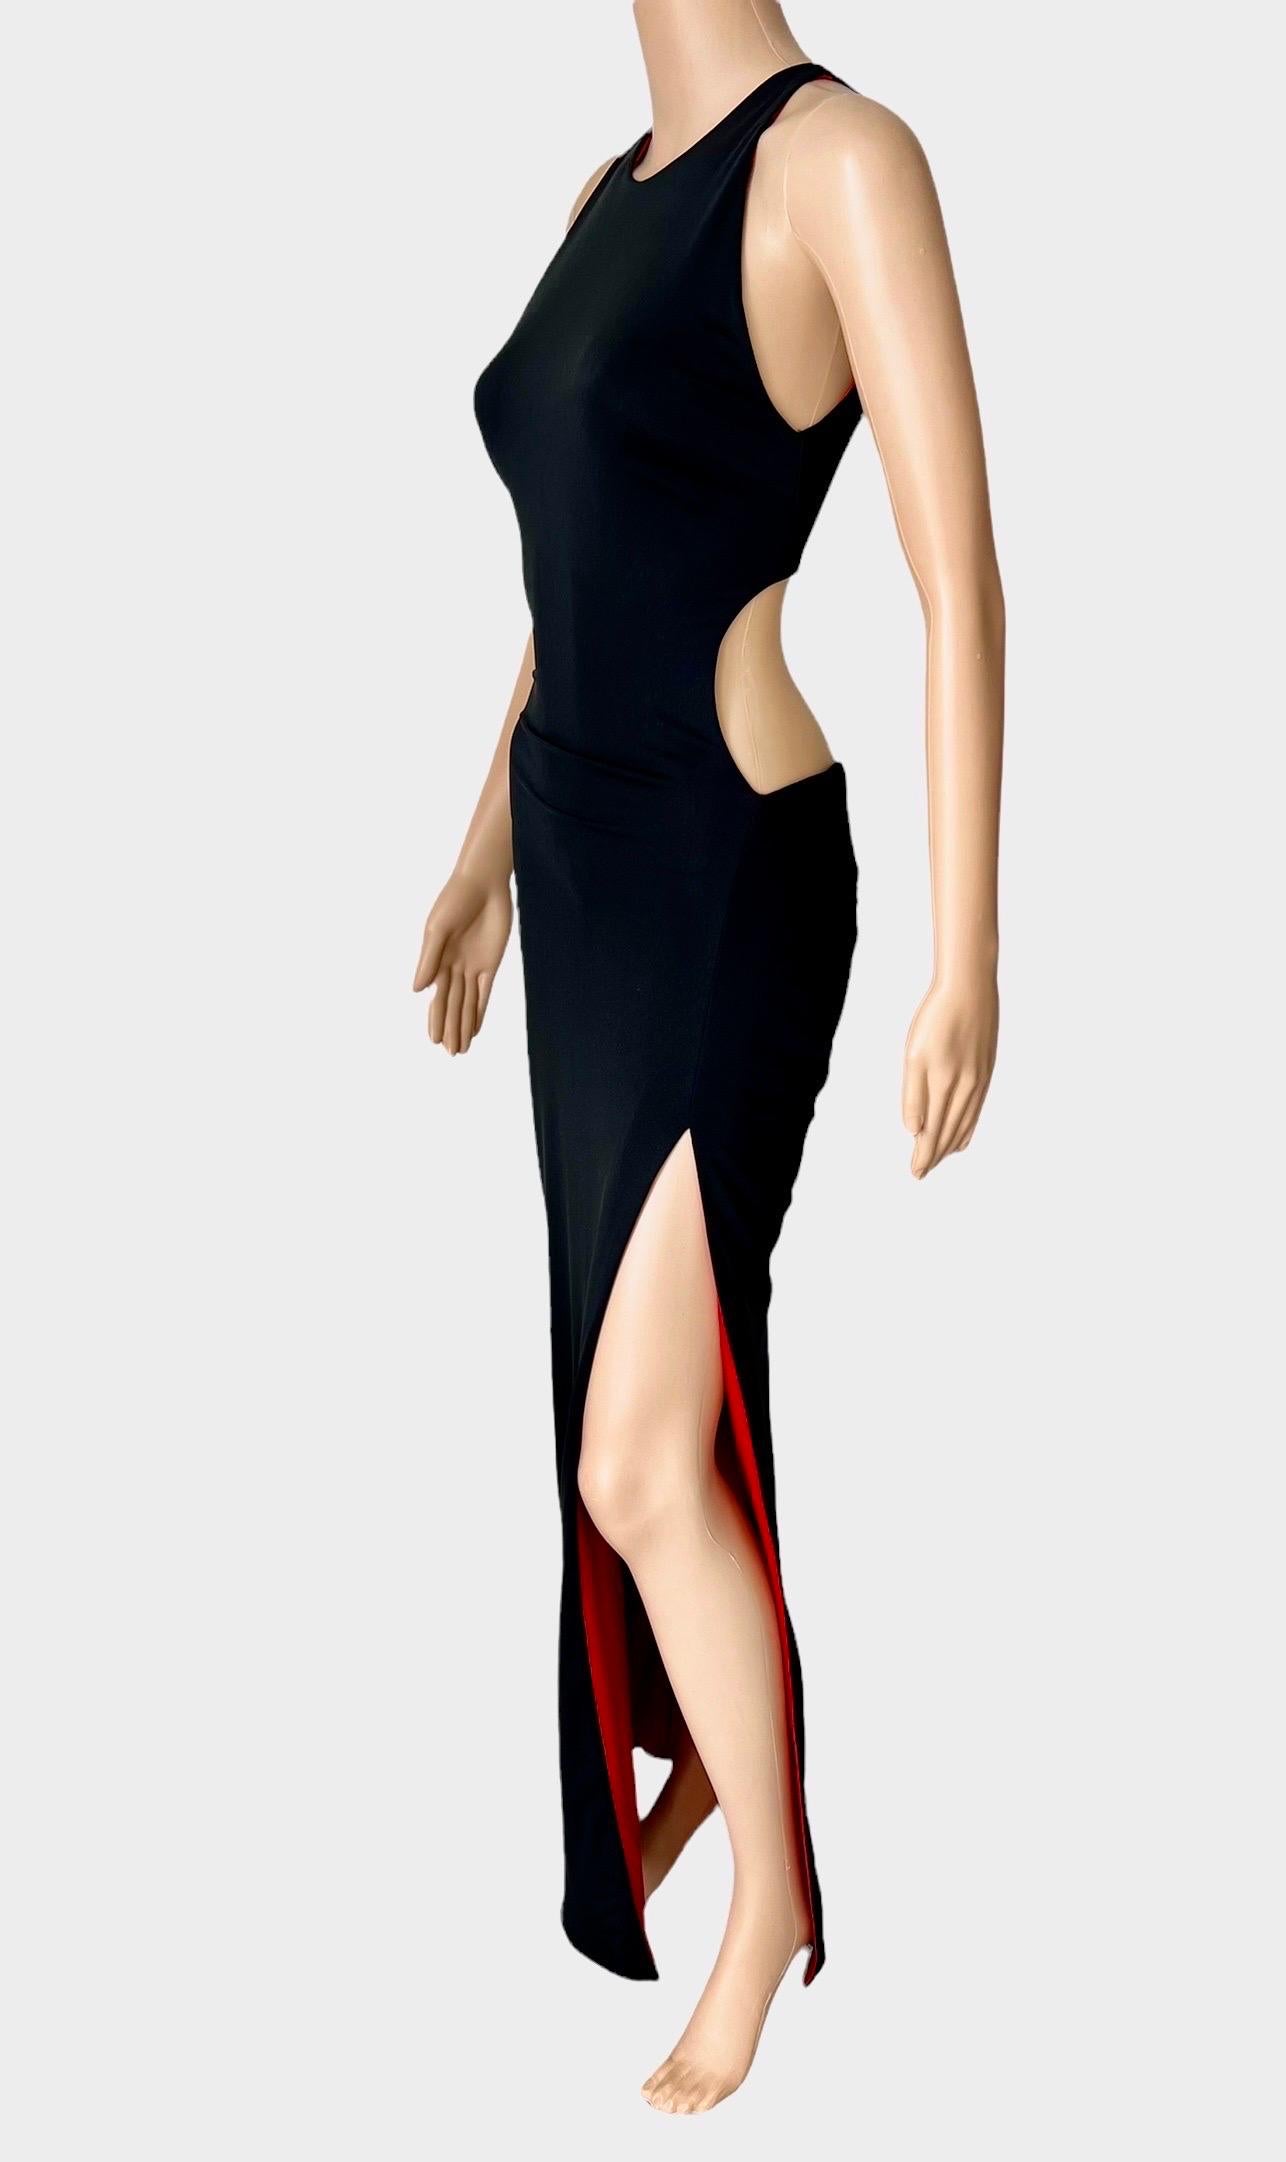 Women's Gianni Versace S/S 1998 Runway Vintage Wet Liquid Look Cutout Evening Dress Gown For Sale